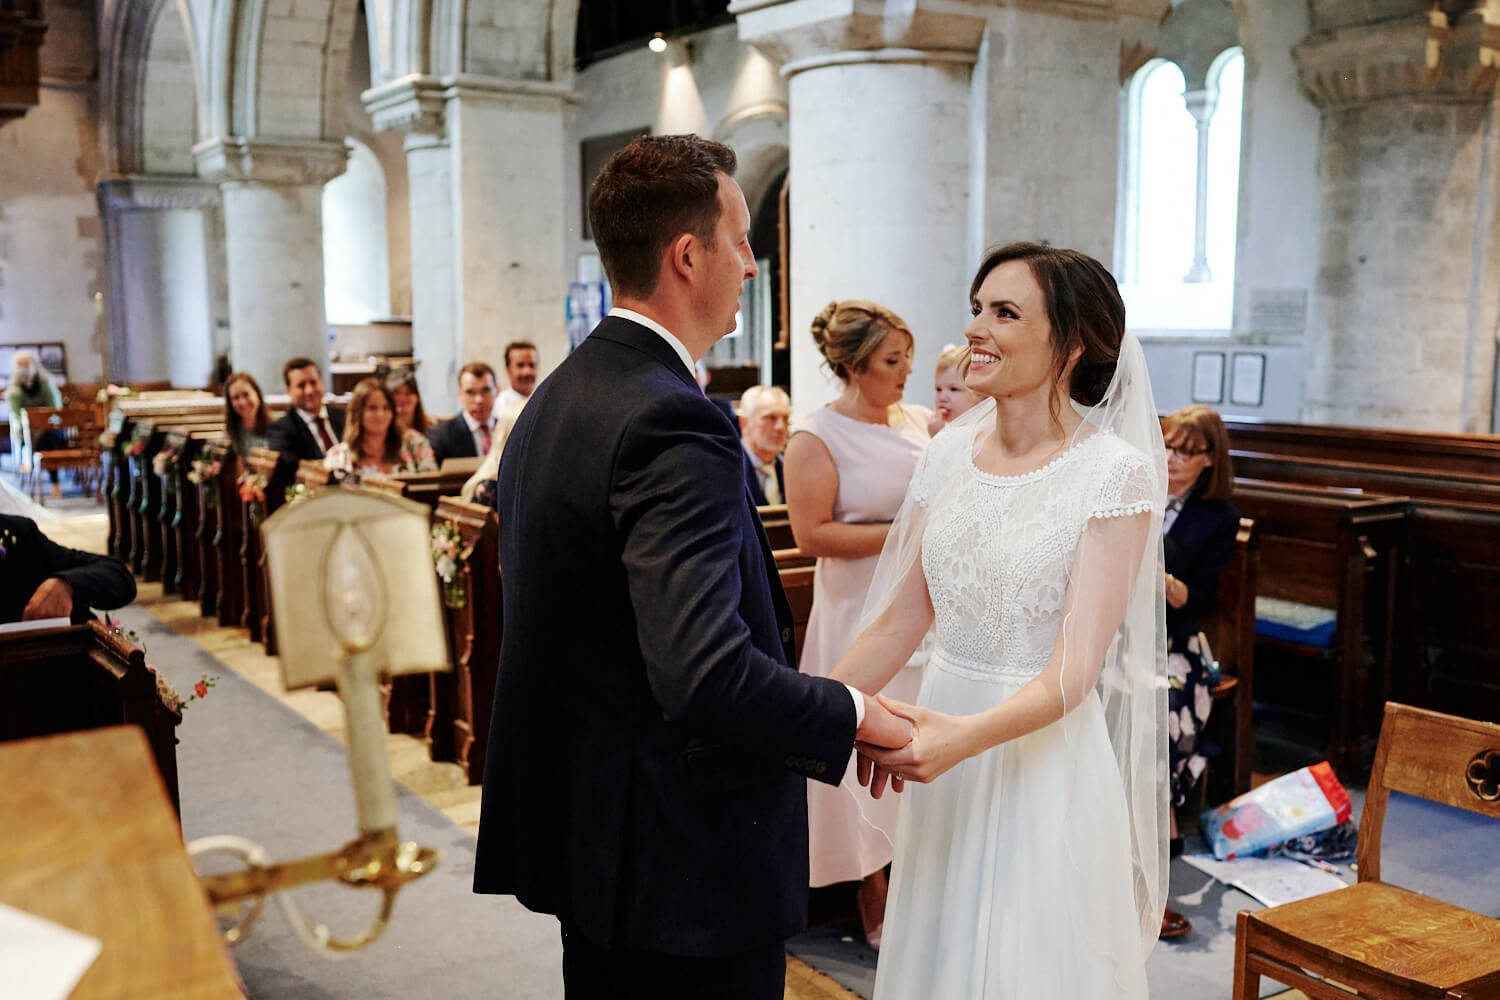 Wedding Photographer, Surrey | Leanne and Oli’s Farnham Wedding 22